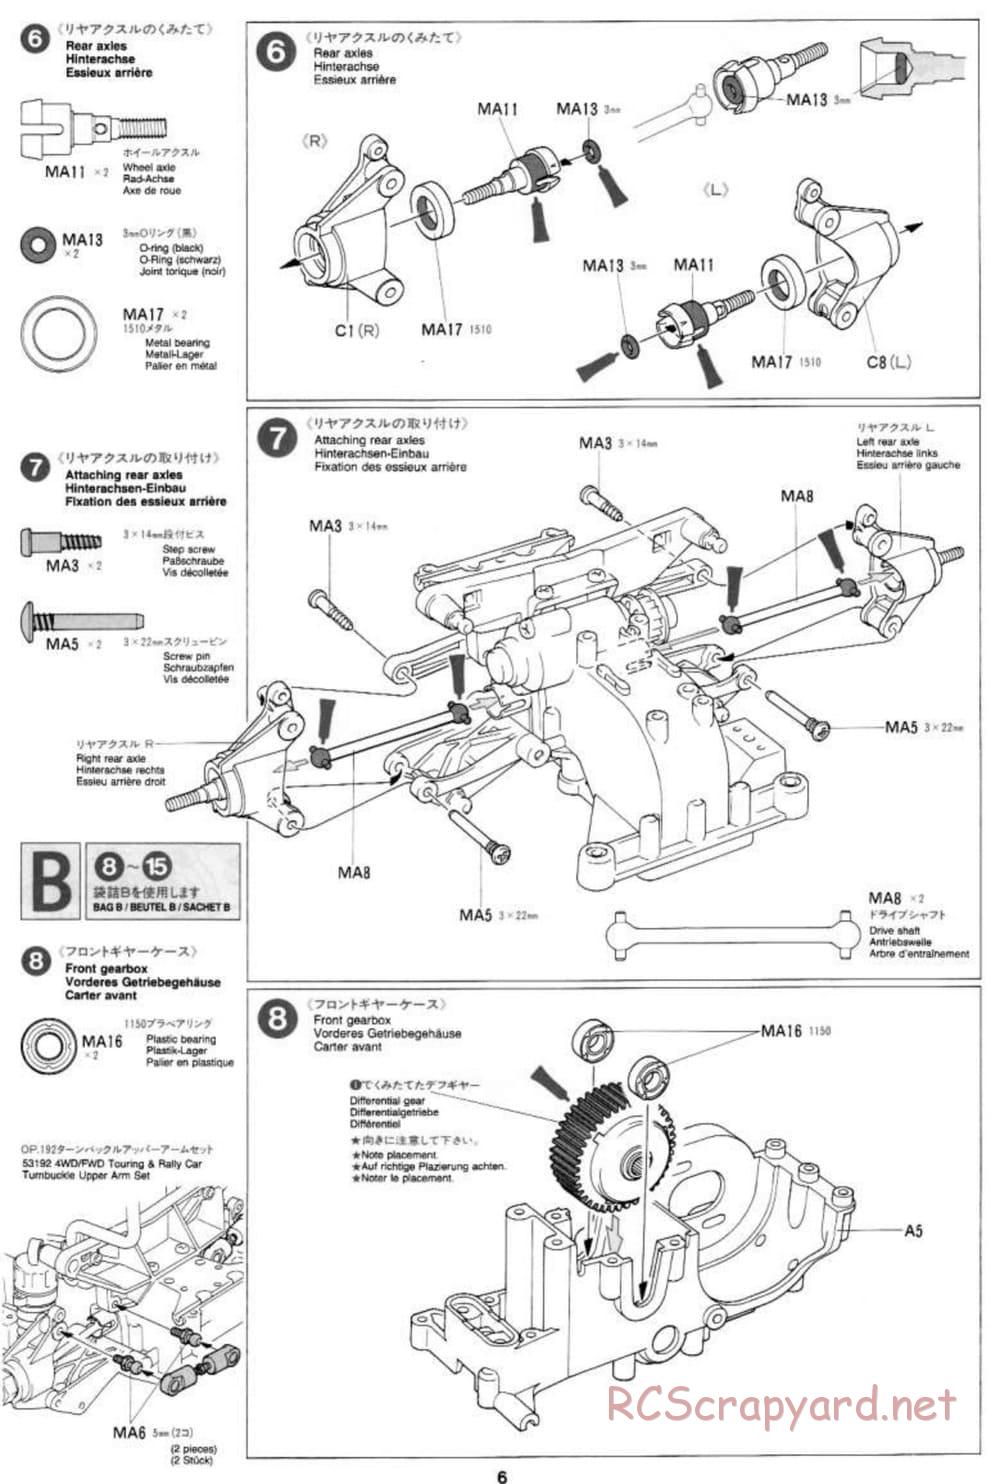 Tamiya - Subaru Impreza WRC 97 - TA-03F Chassis - Manual - Page 6